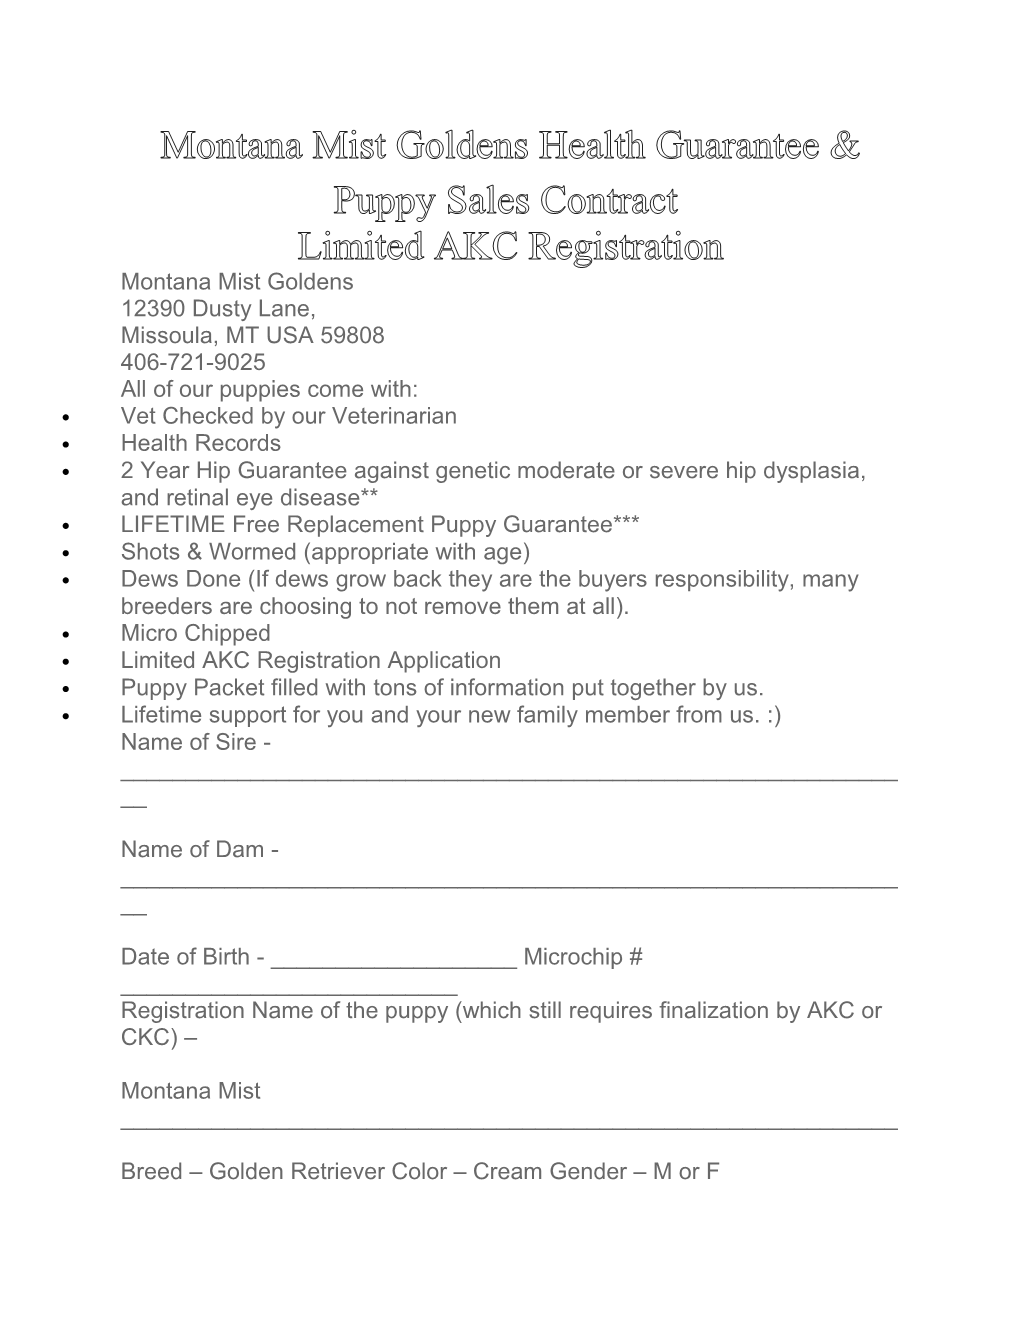 Montana Mist Goldens Health Guarantee & Puppy Sales Contract